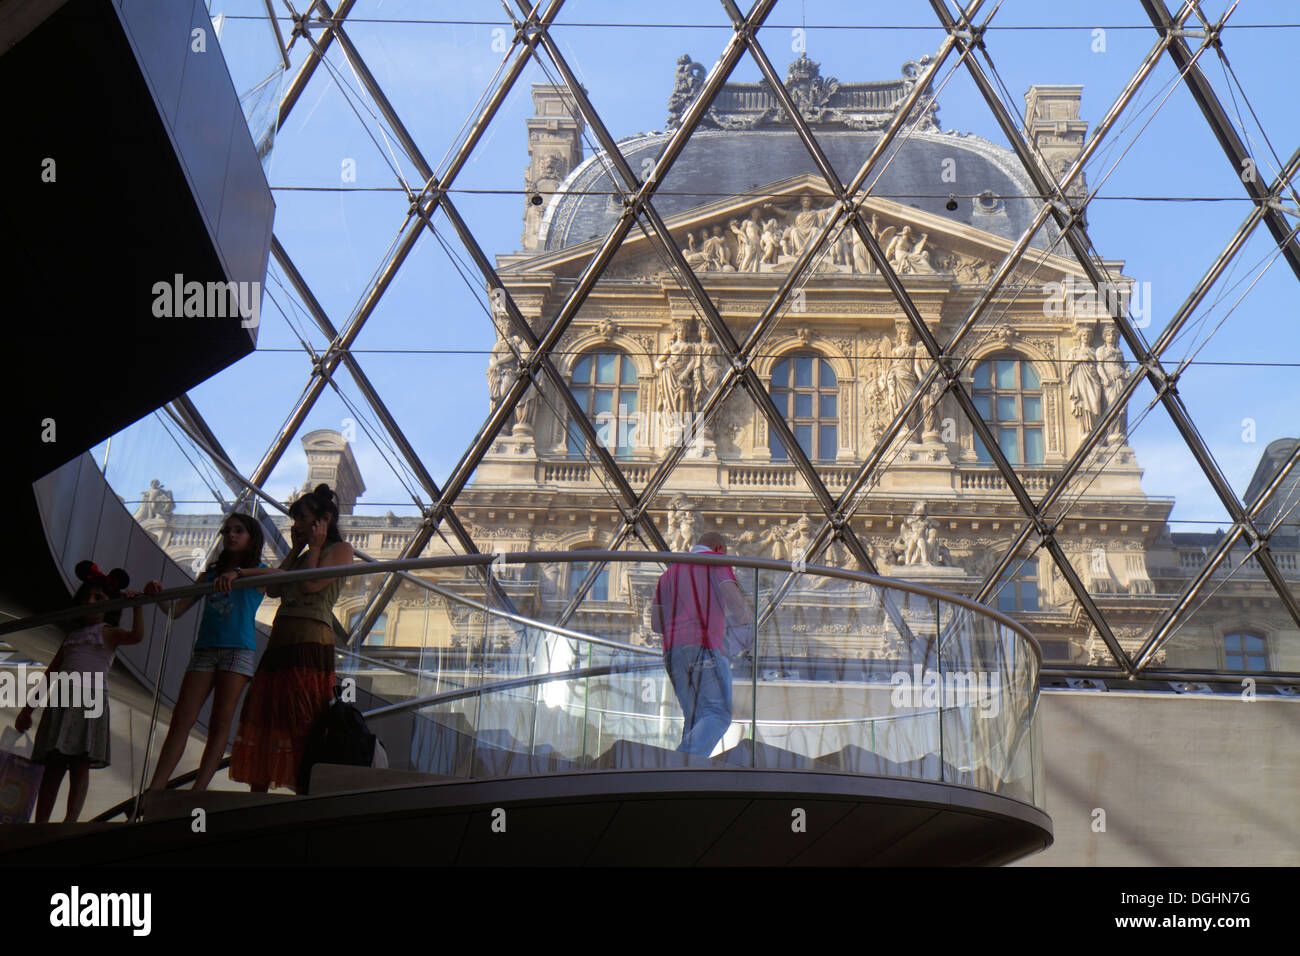 Paris France,1st arrondissement,Louvre Art Museum,Musee du Louvre Palace,interior inside,Pyramid,France130821147 Stock Photo